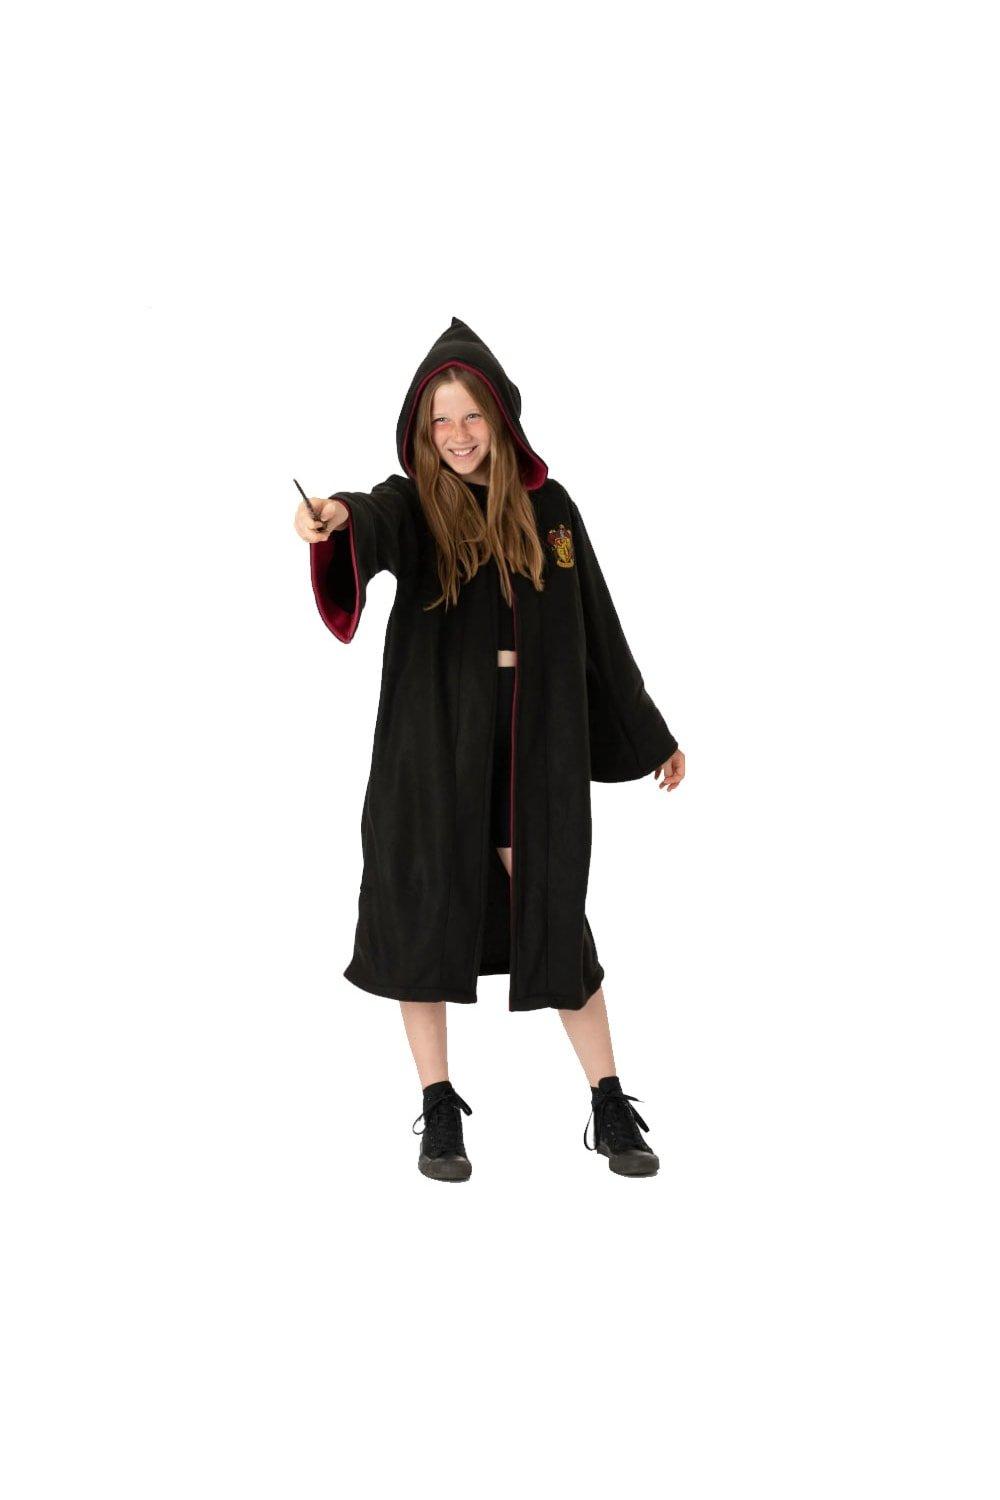 Gryffindor Replica Gown